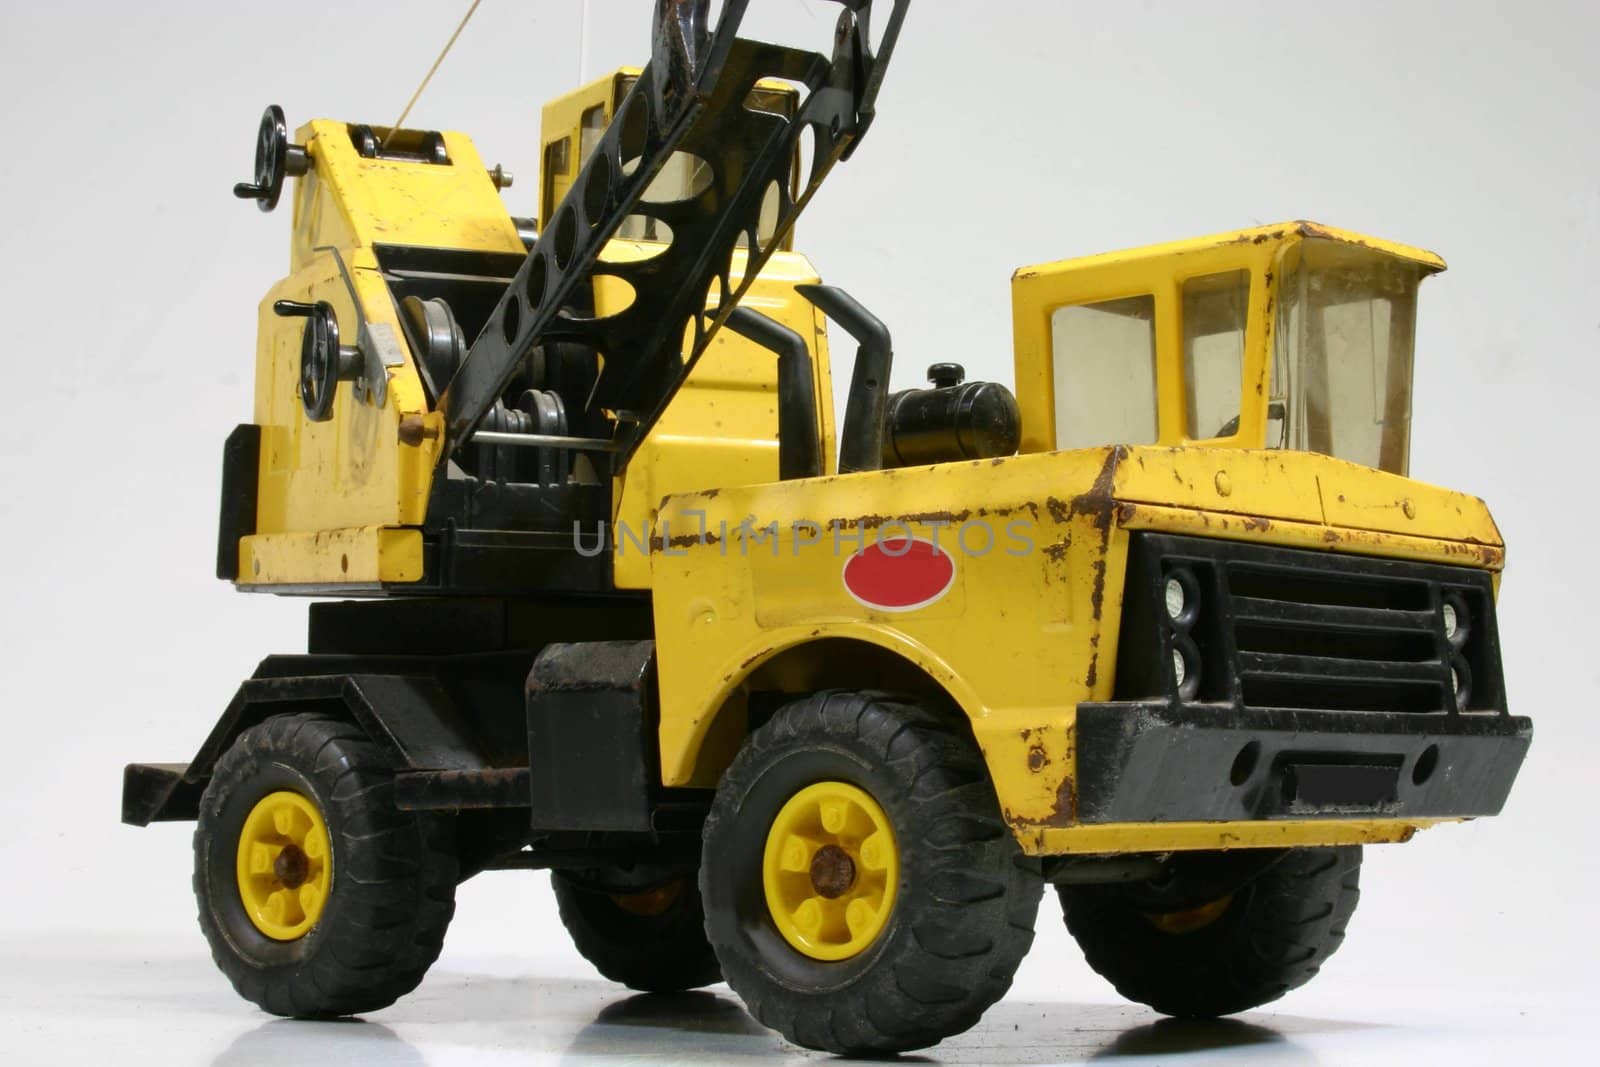 Vintage toy crane truck on a white background.